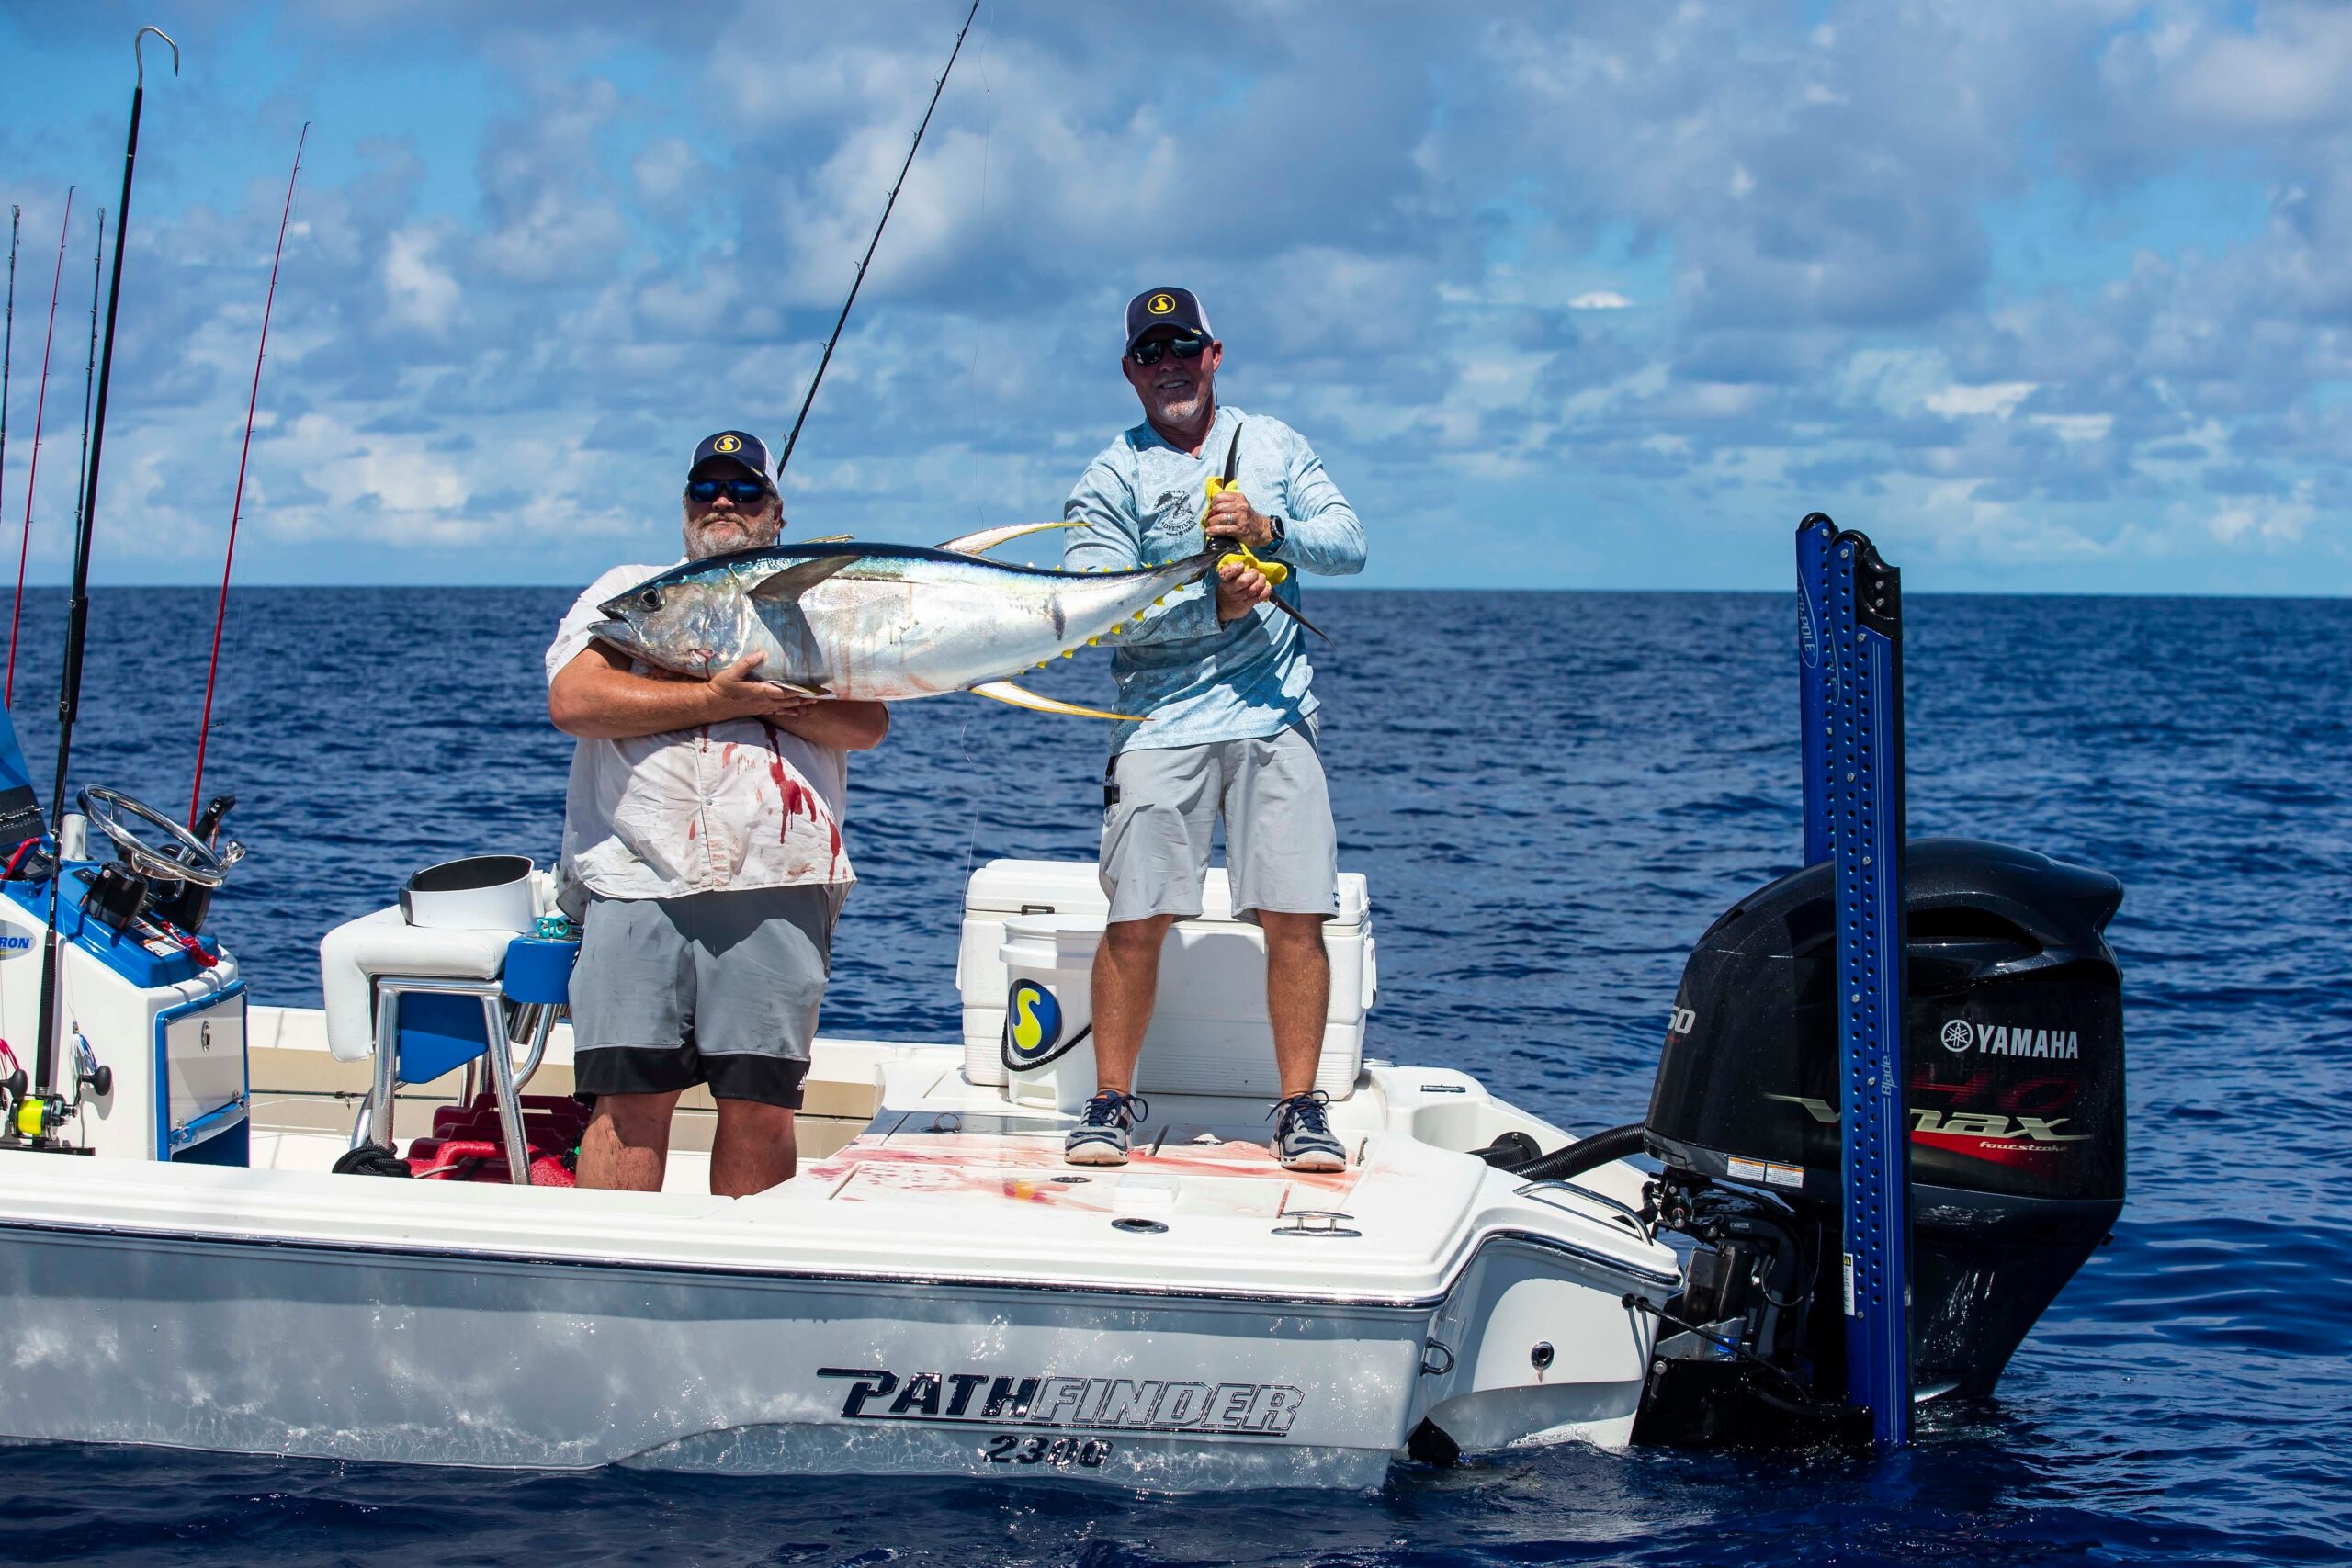 Pathfinder bay boat anglers holding big tuna on board